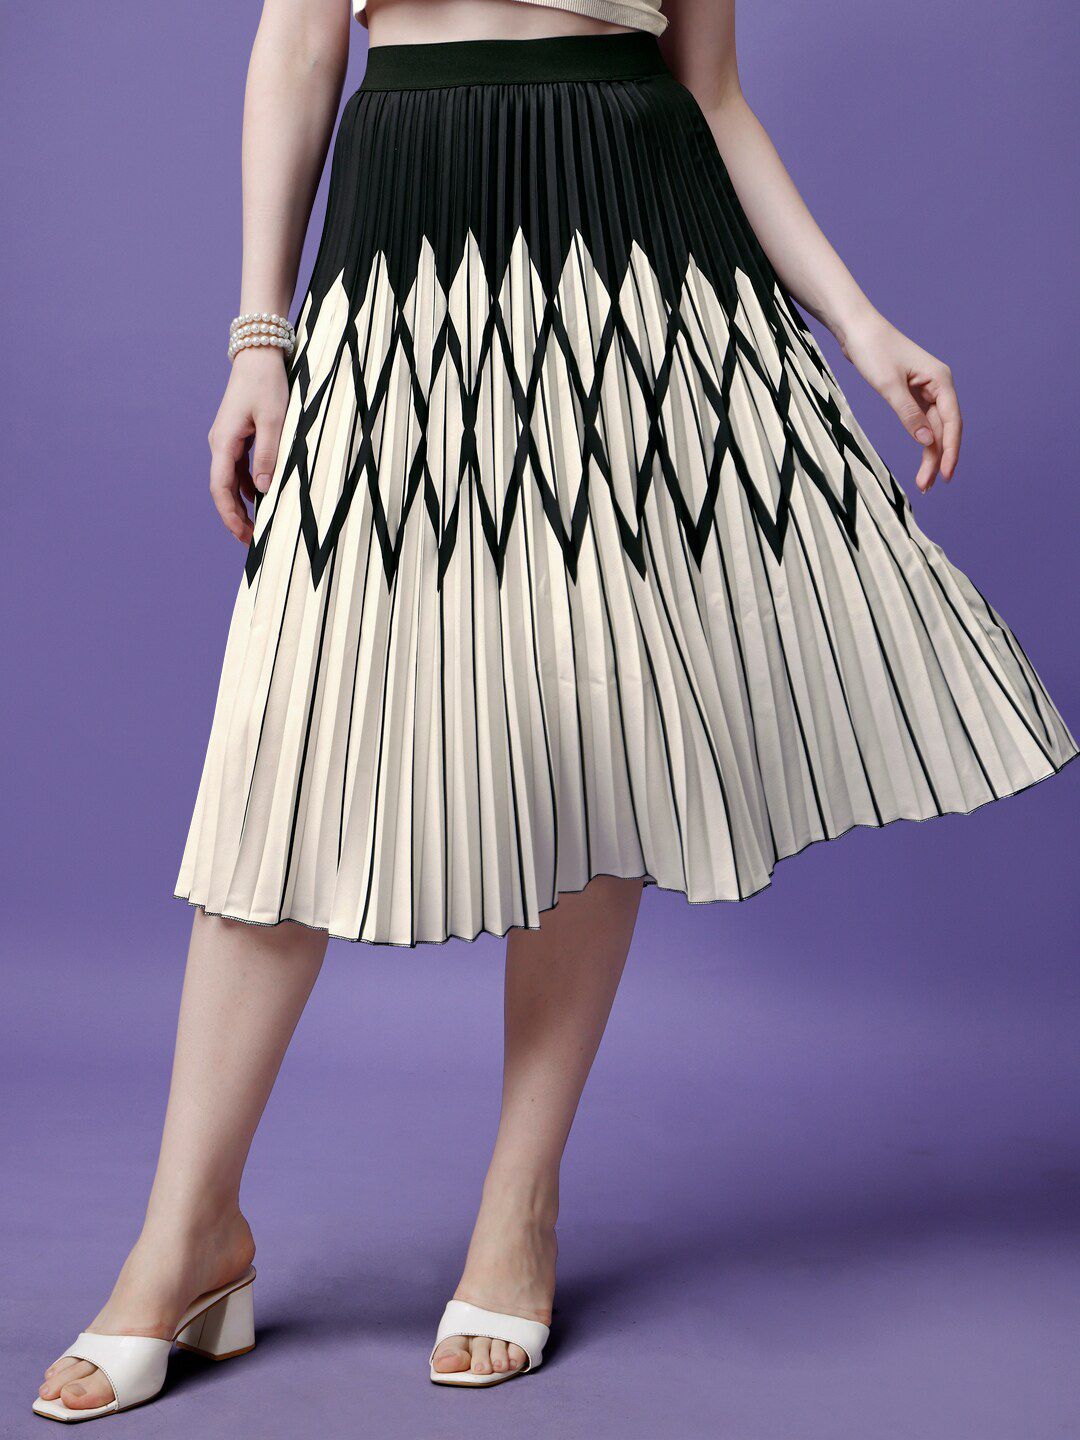 DEKLOOK Geometric Printed Pleated Flared Midi Skirt Price in India